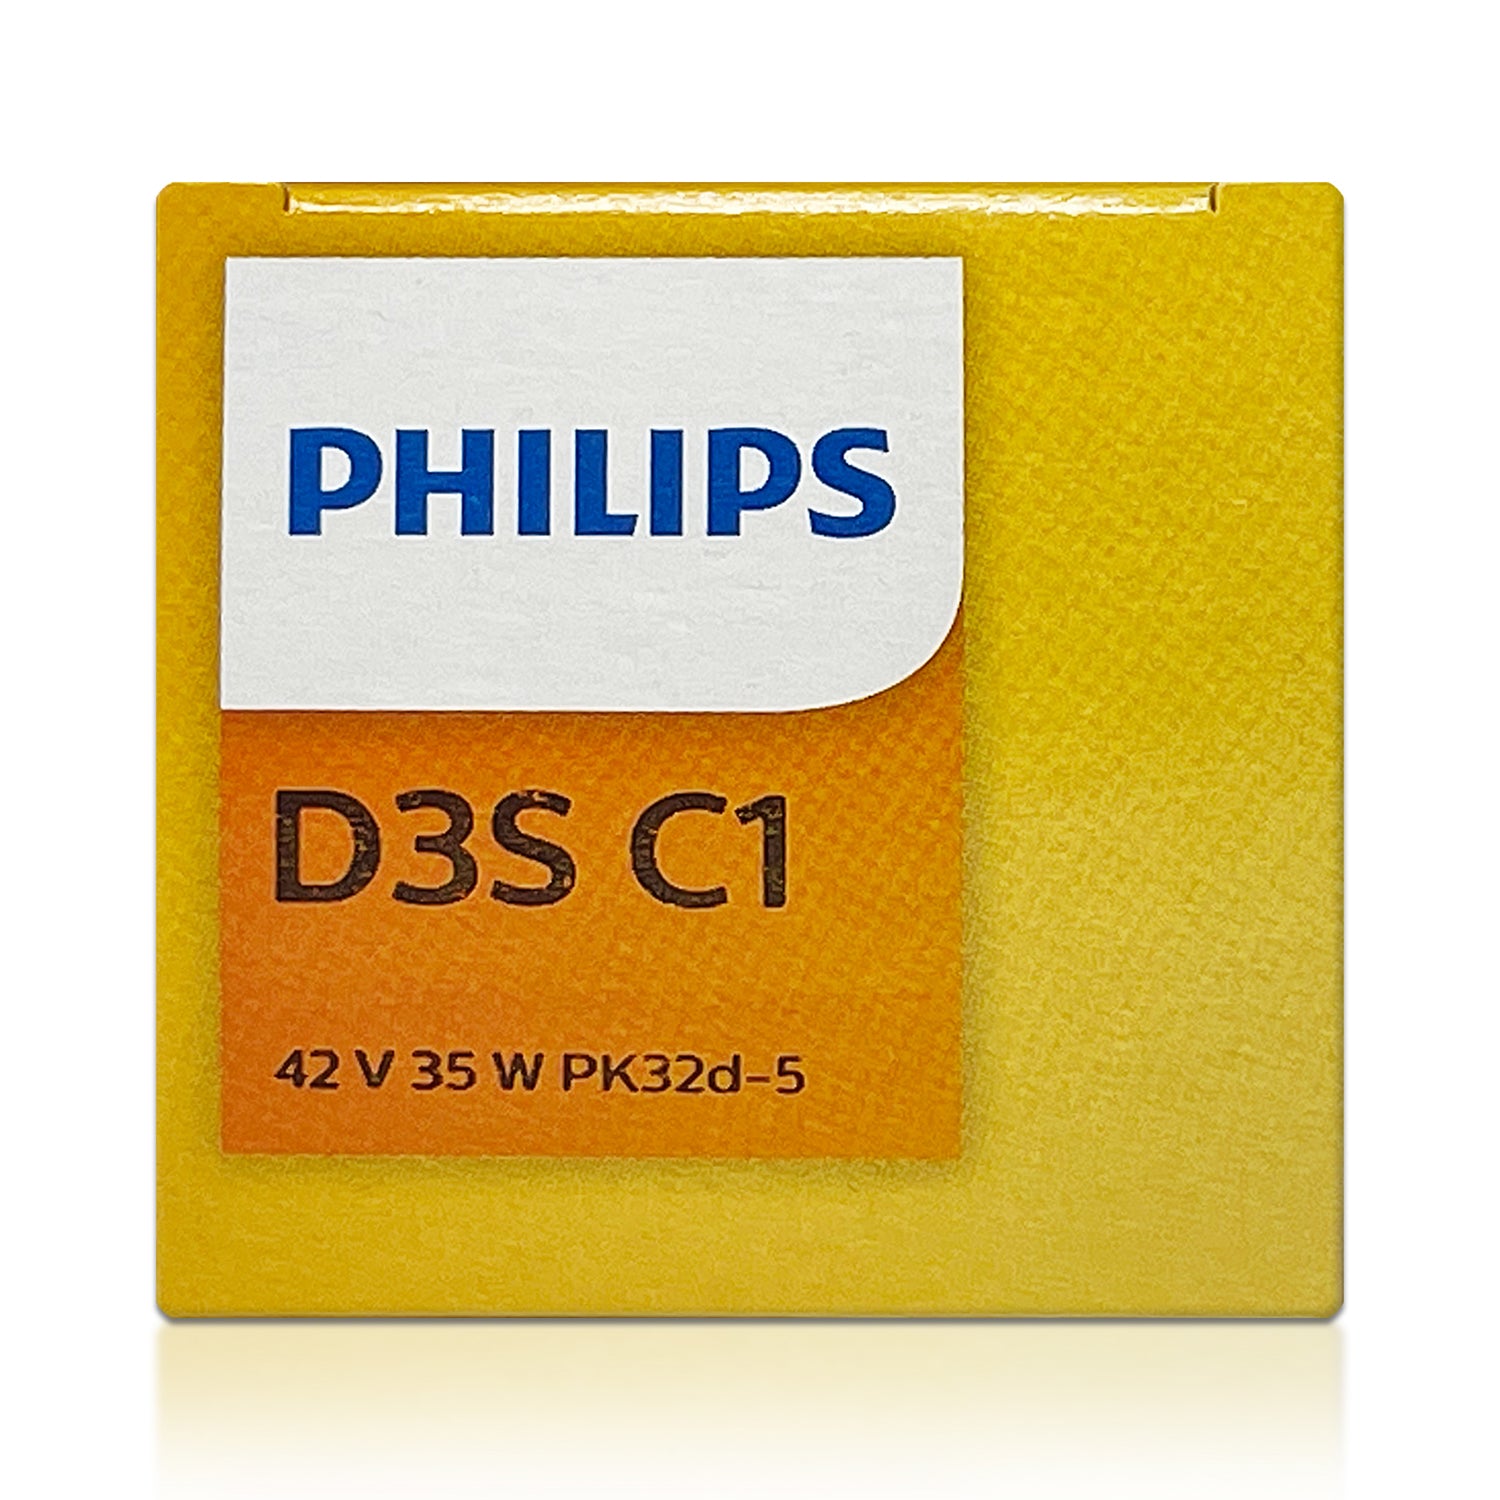 PHILIPS 42302C1 D3S Standard Xenon HID Headlight Bulb, 1 Pack – Parts  Universe